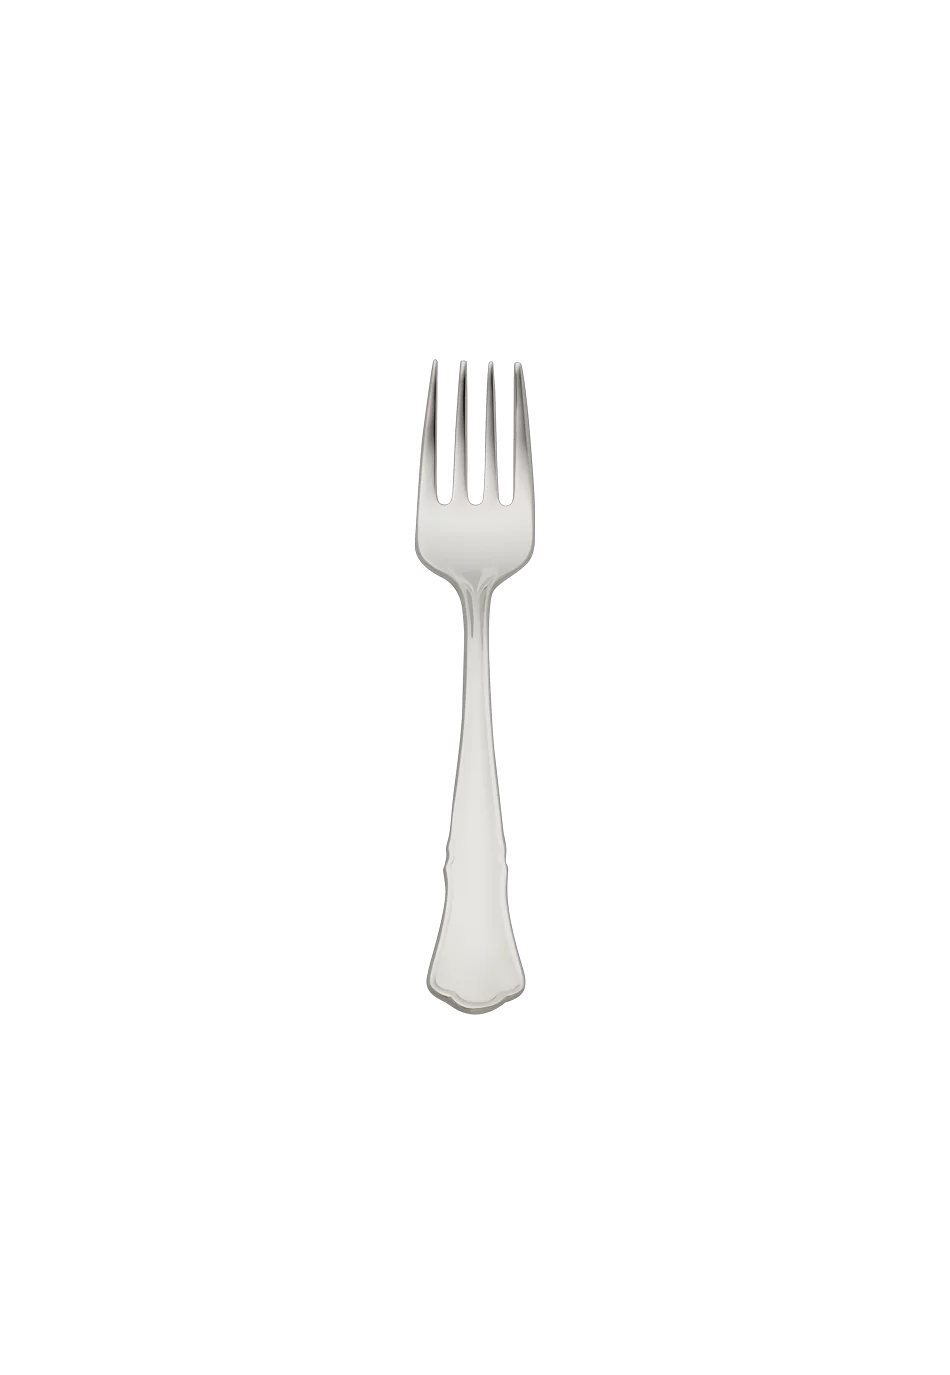 Alt-Chippendale Children's Fork (150g massive silverplated)